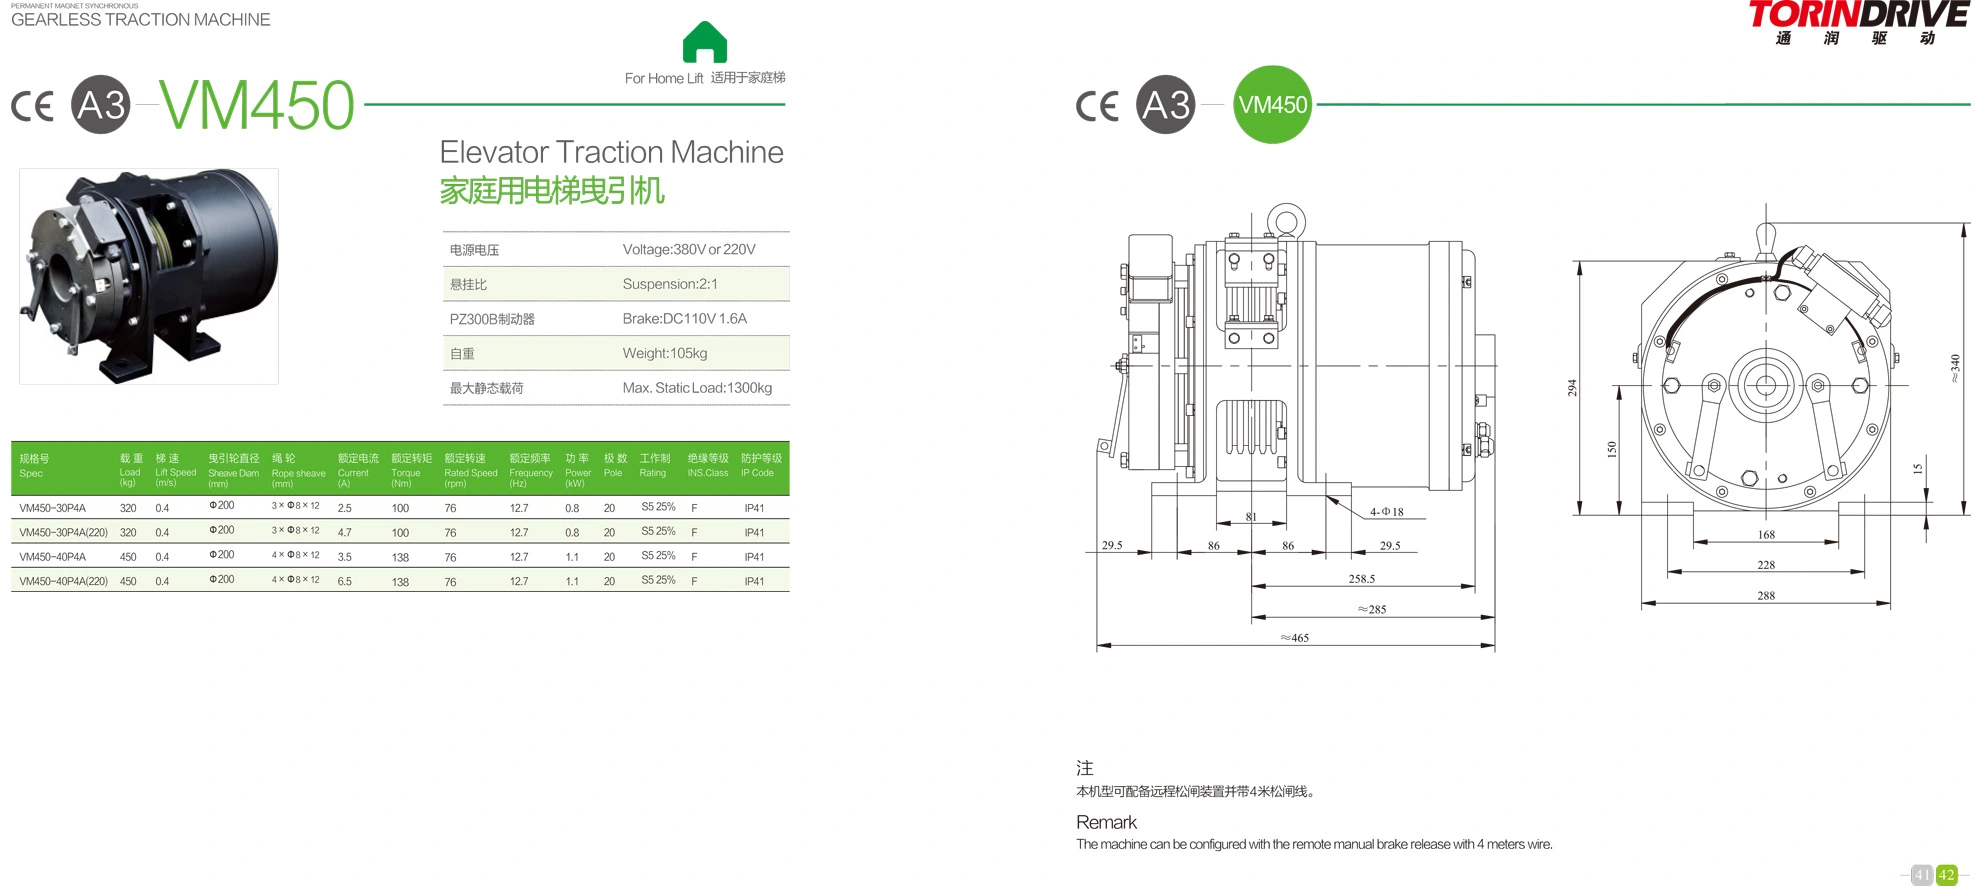 TorinDrive VM450 Elevator Traction Machine DETAIL